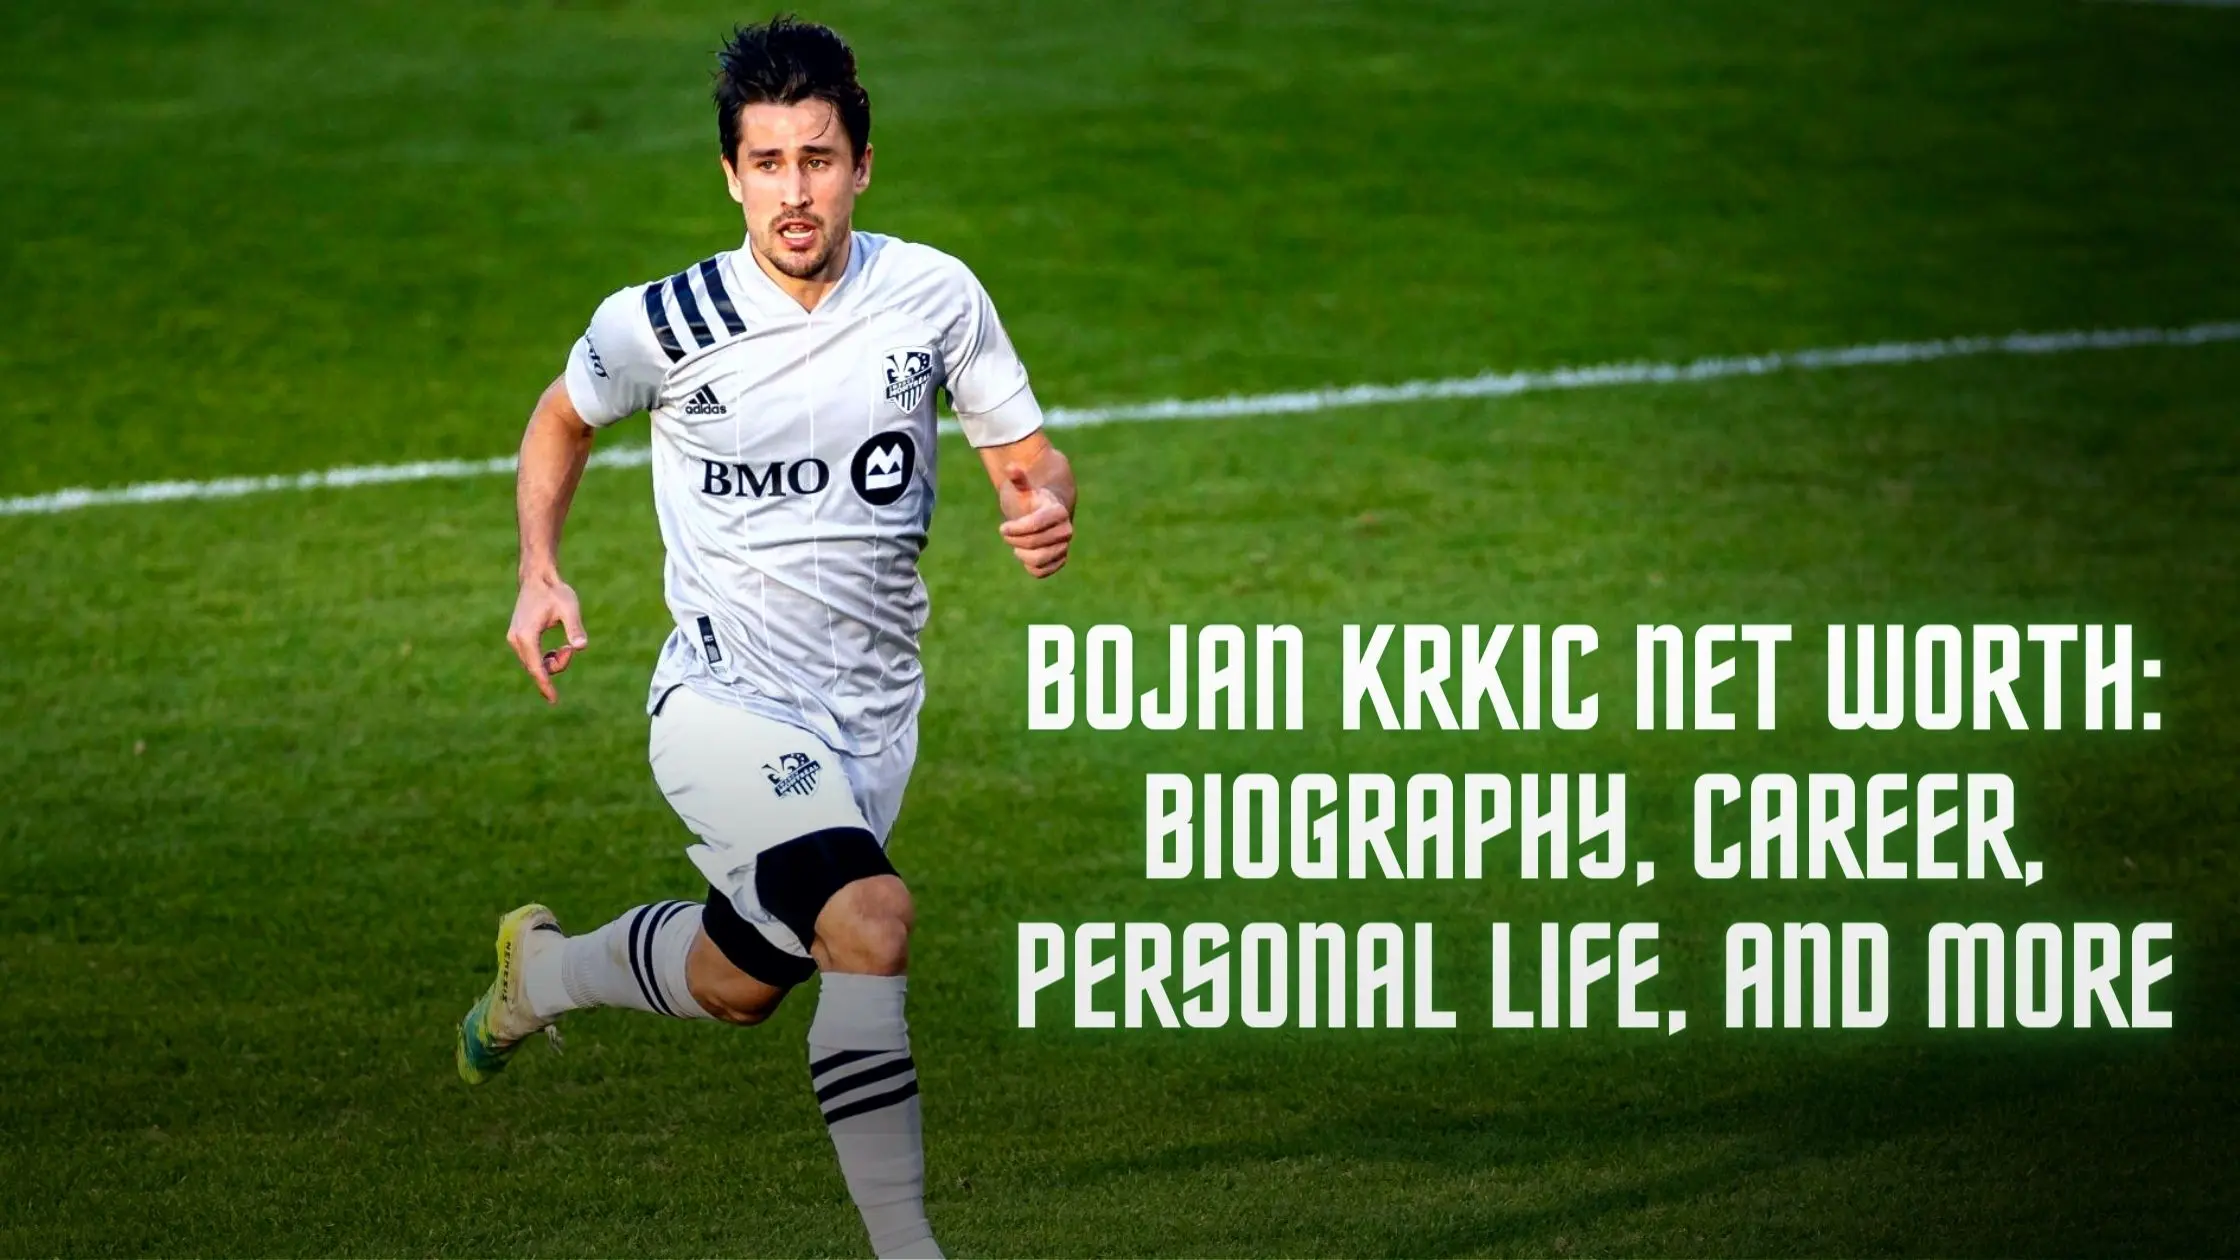 Bojan Krkic Net Worth Biography, Career, Personal Life, And More